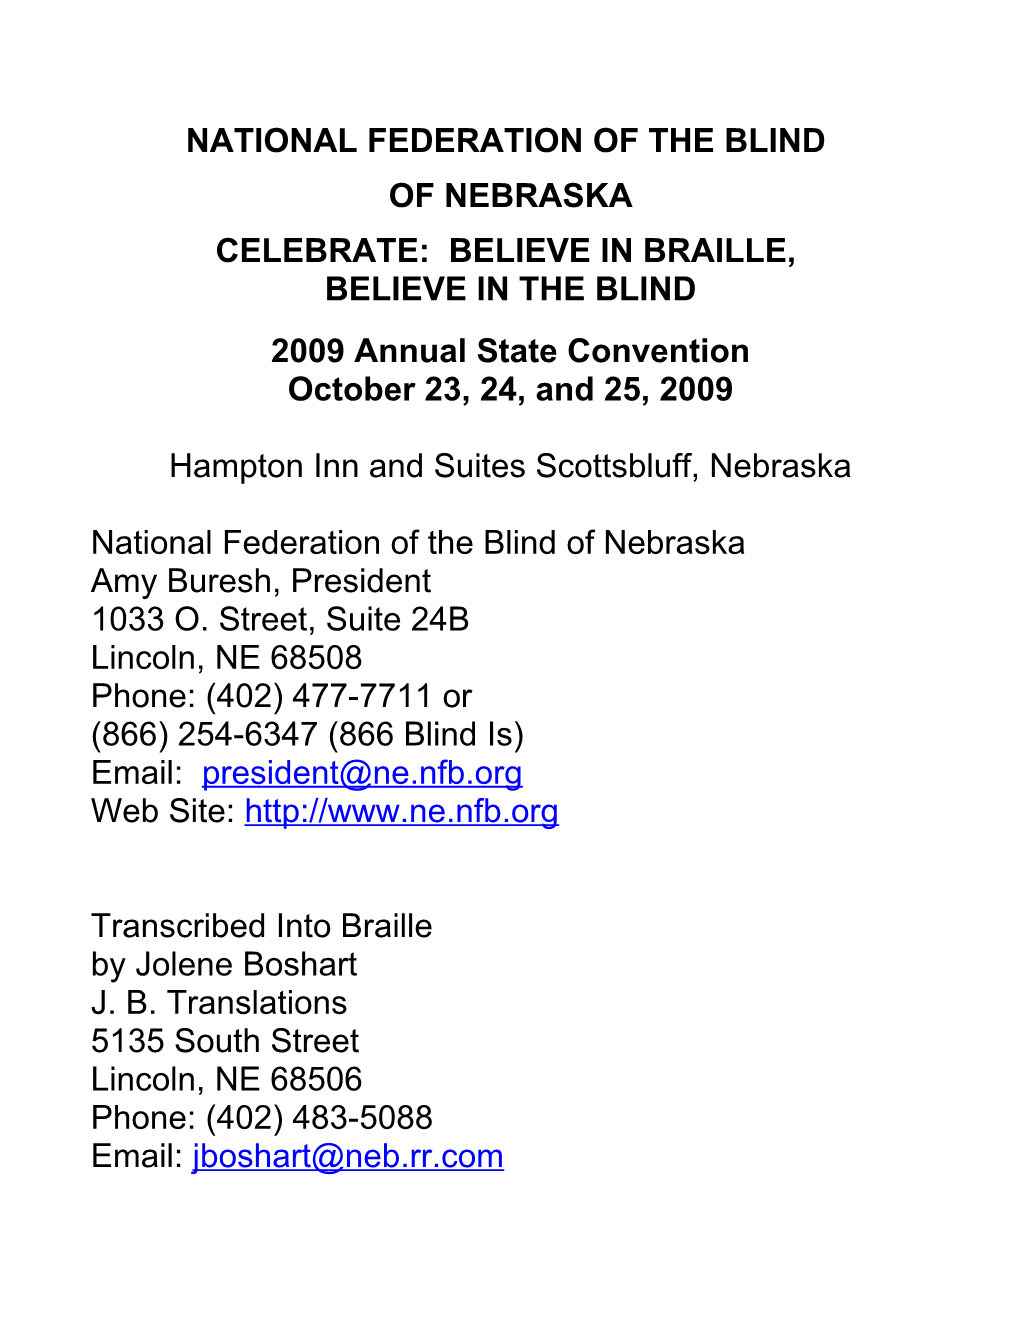 National Federation of the Blind of Nebraska